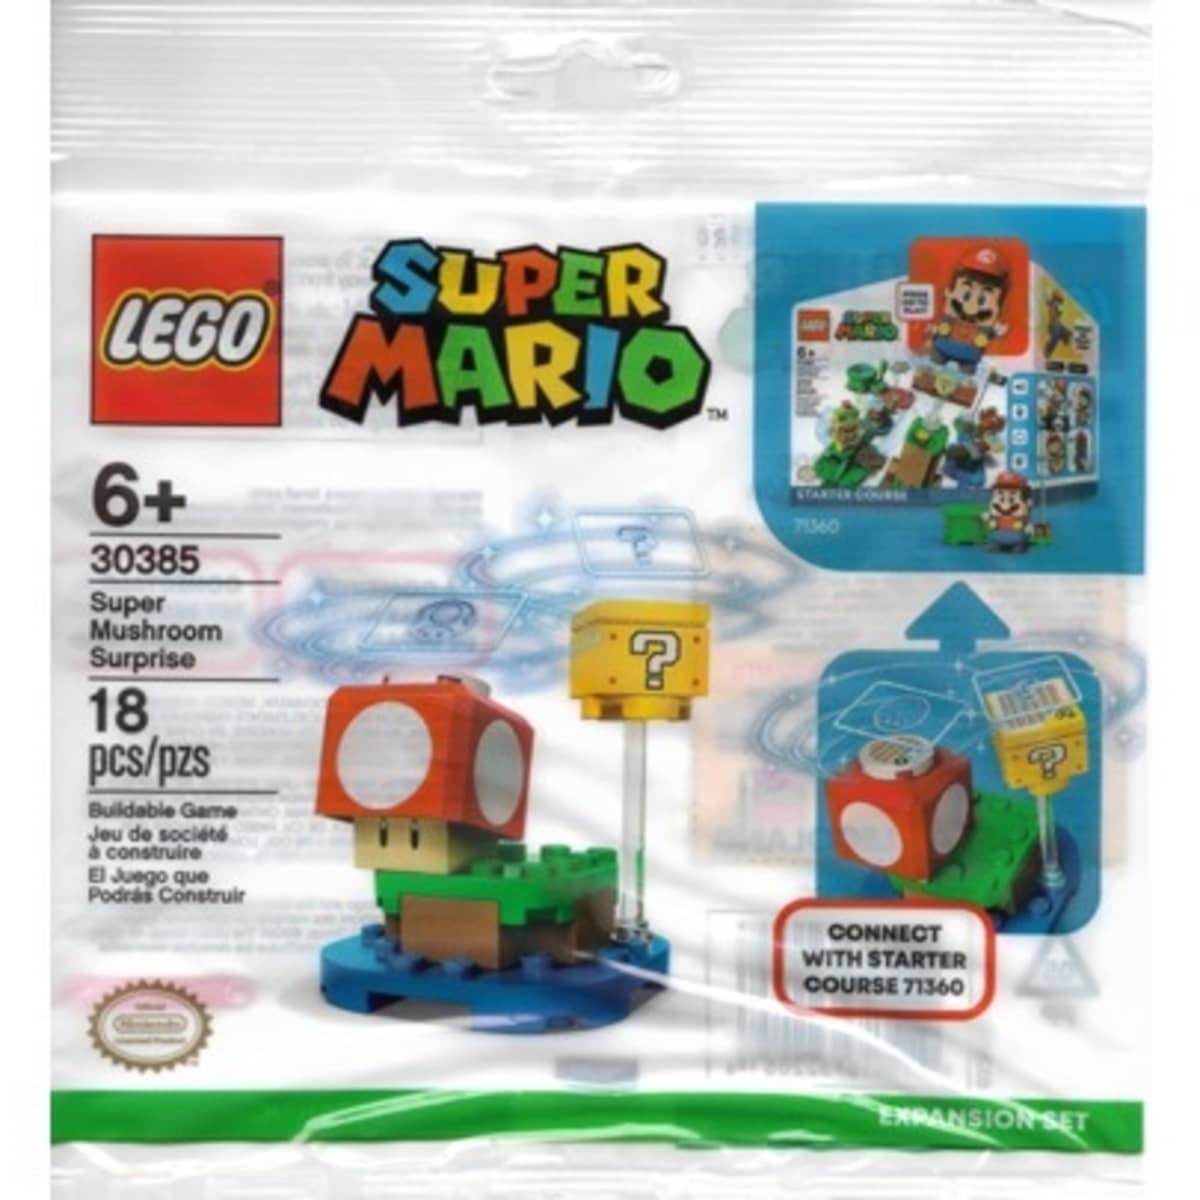 LEGO SUPER MARIO MUSHROOM SET 30385 SURPRISE NEW POLYBAG 18 PIECE CONNECT 71360 